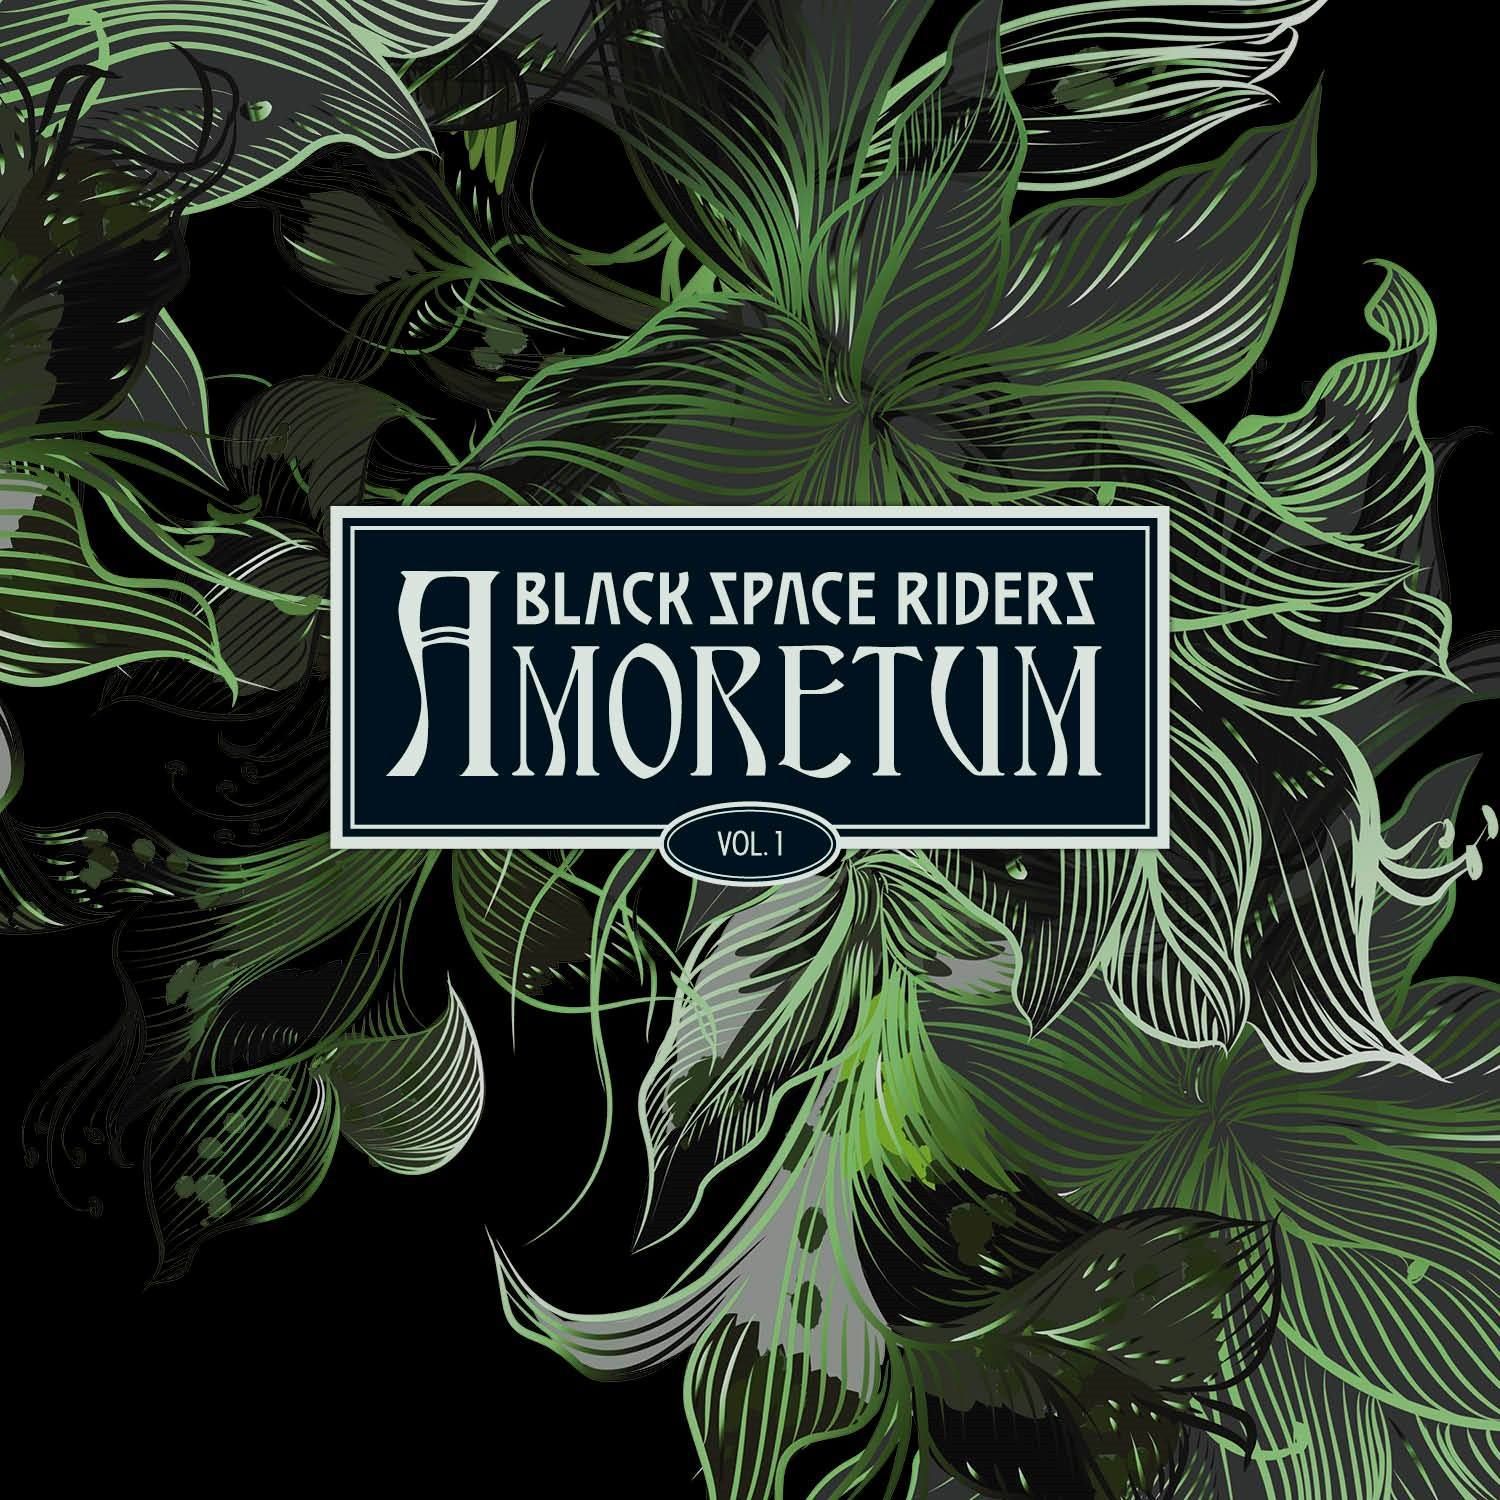 Black Space Riders: 'Another Sort Of Homecoming'-Video veröffentlicht